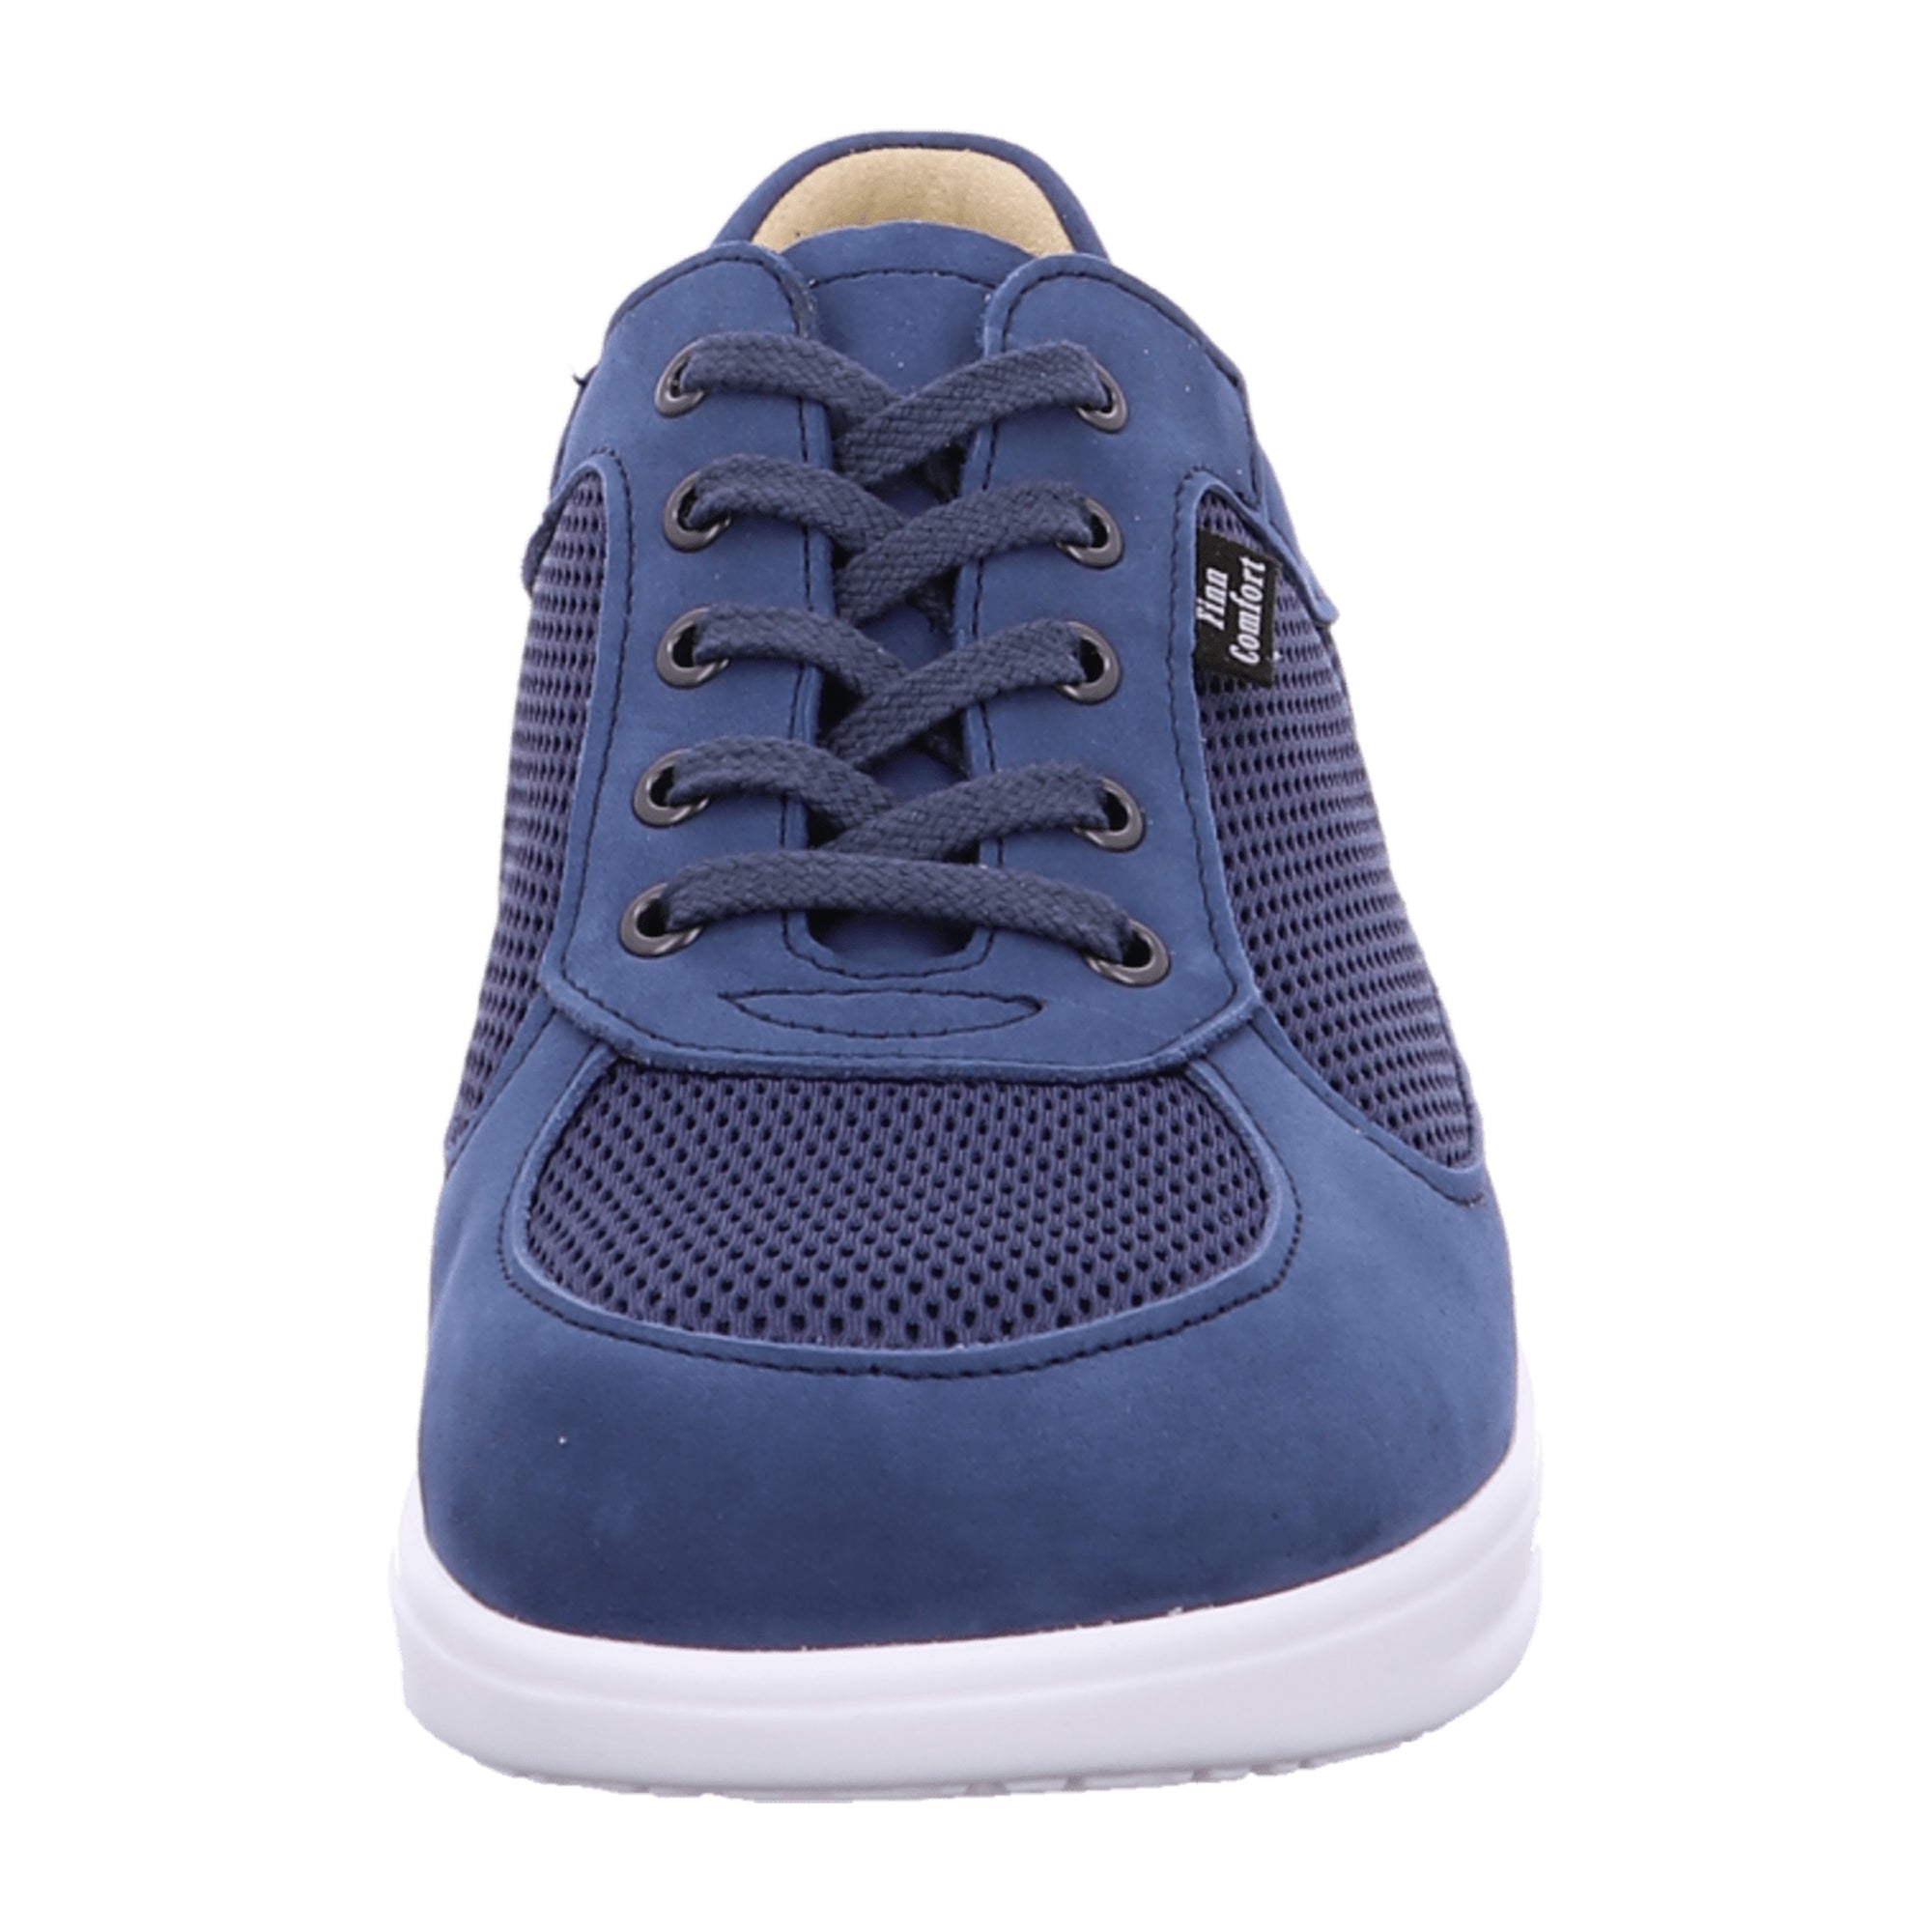 Finn Comfort Columbia Women's Stylish Blue Denim Sneakers